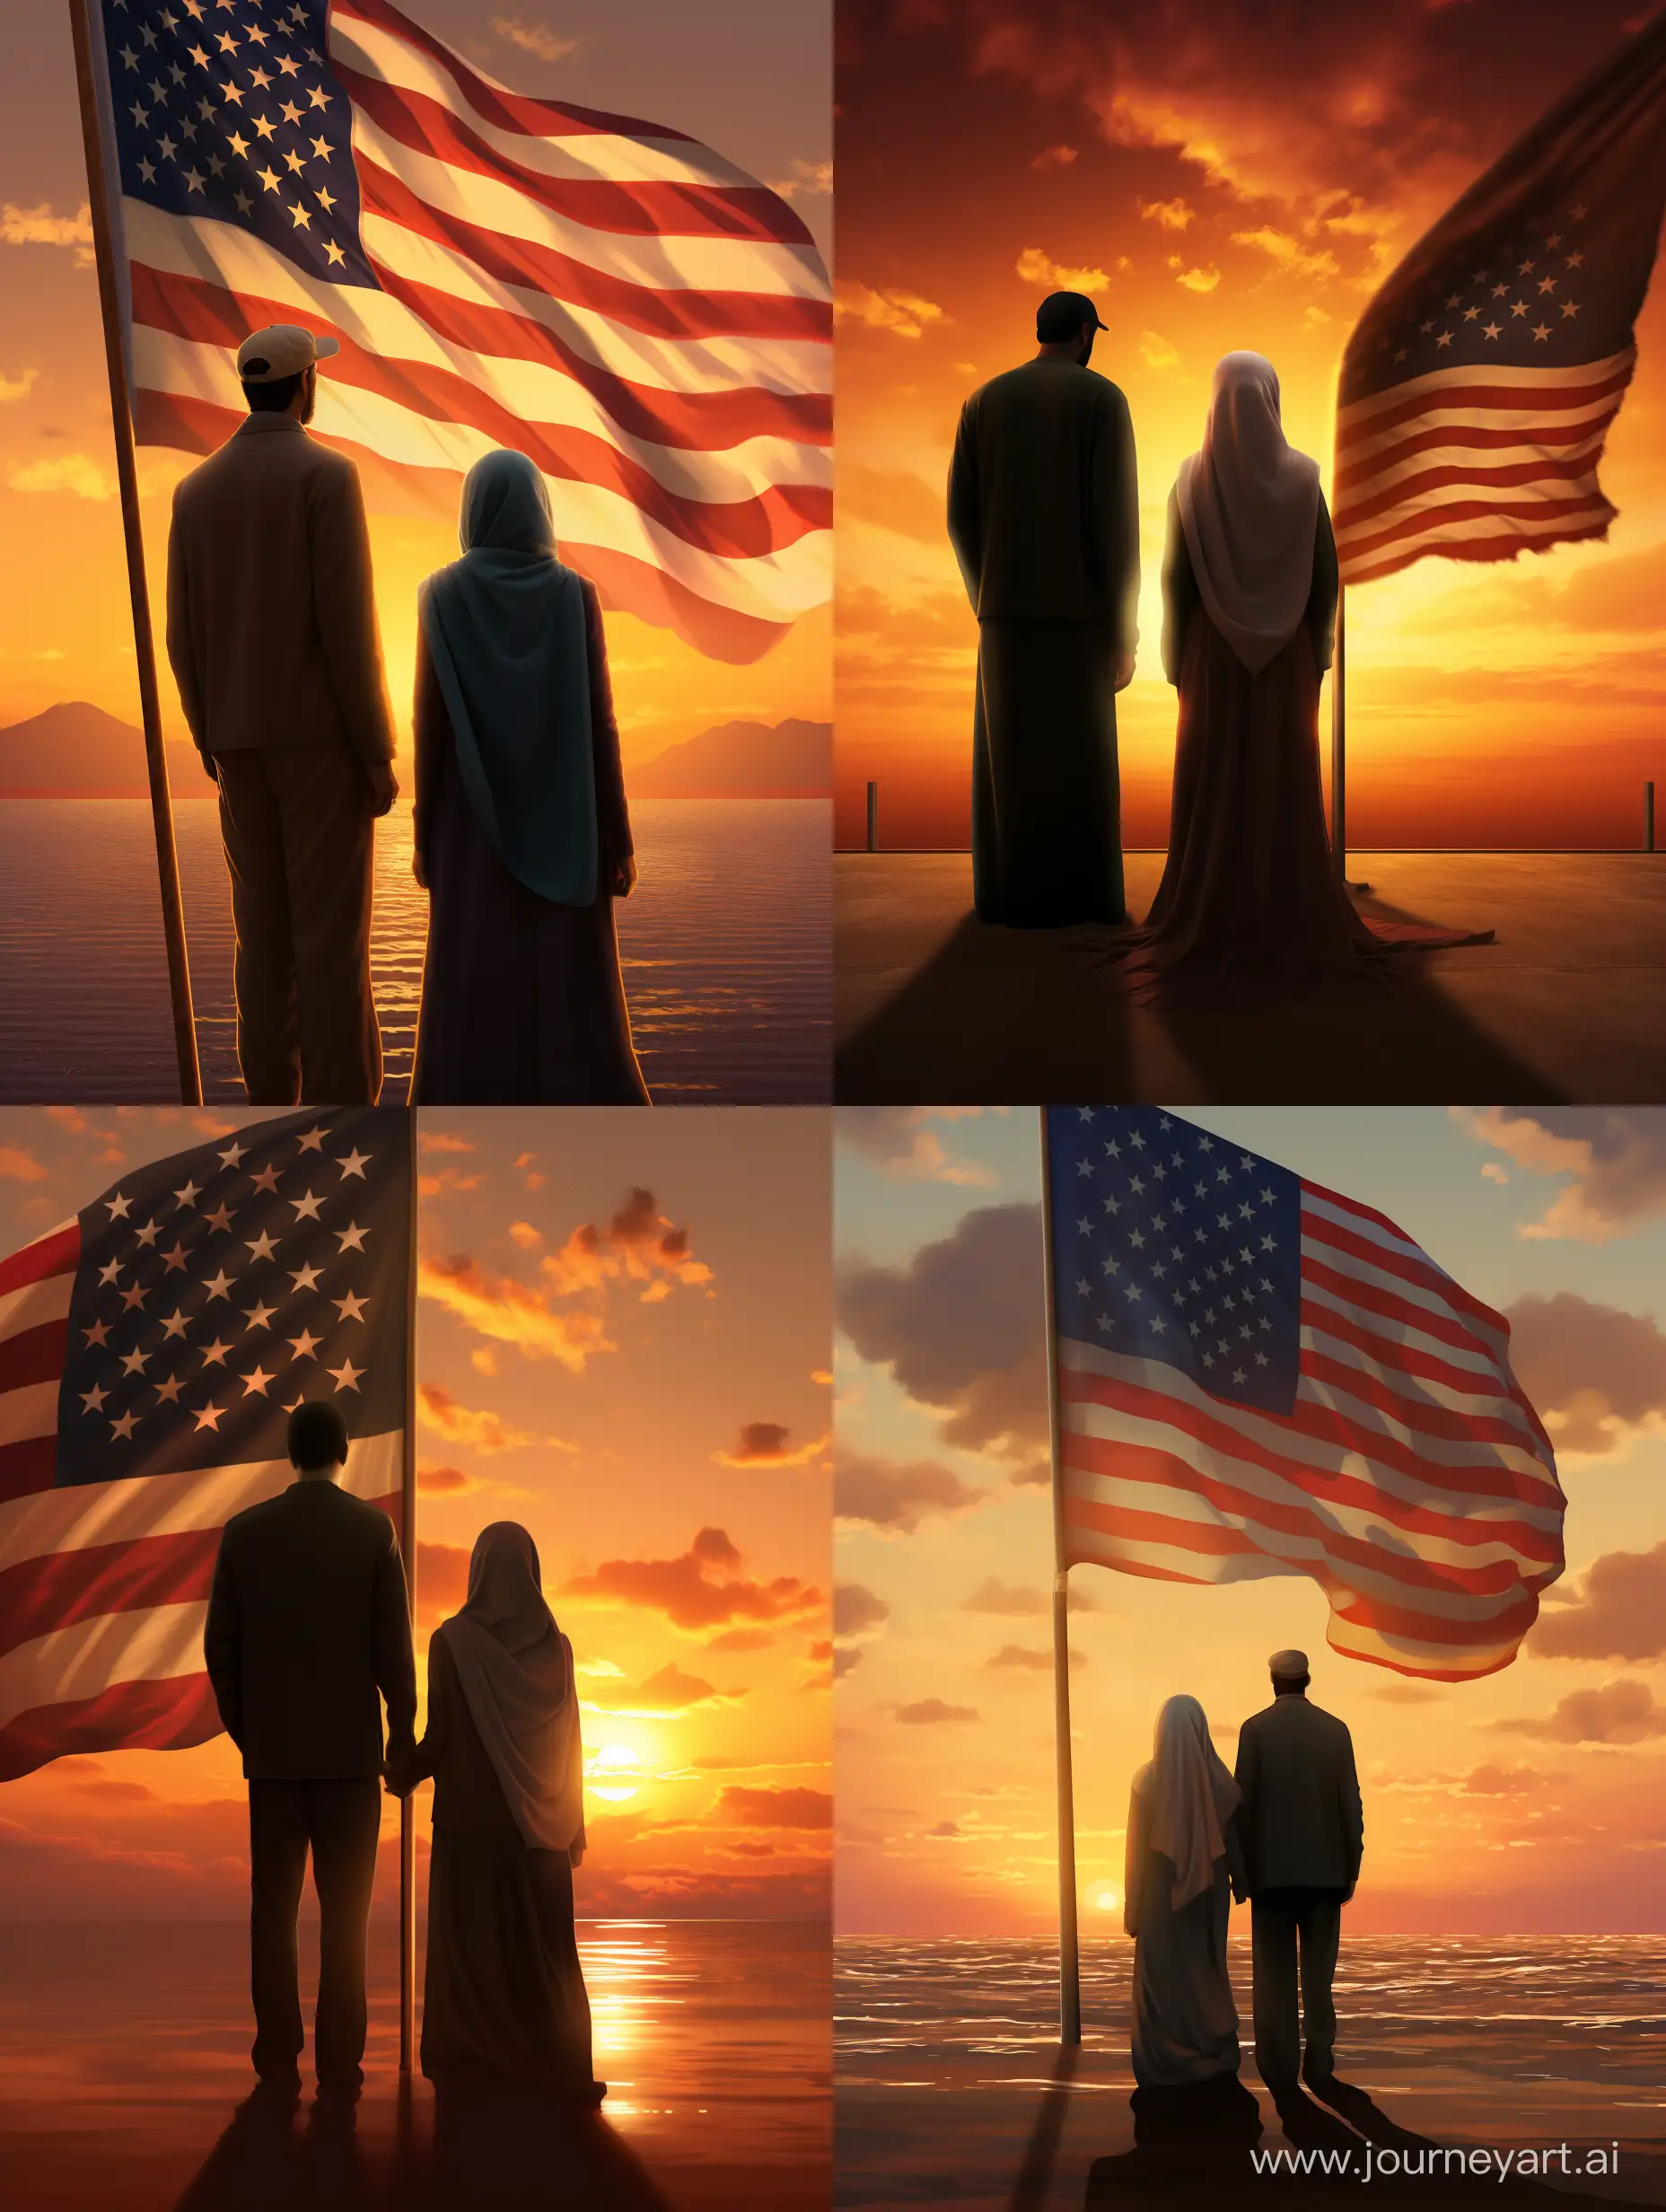 Muslim-Pledge-of-Allegiance-at-Sunset